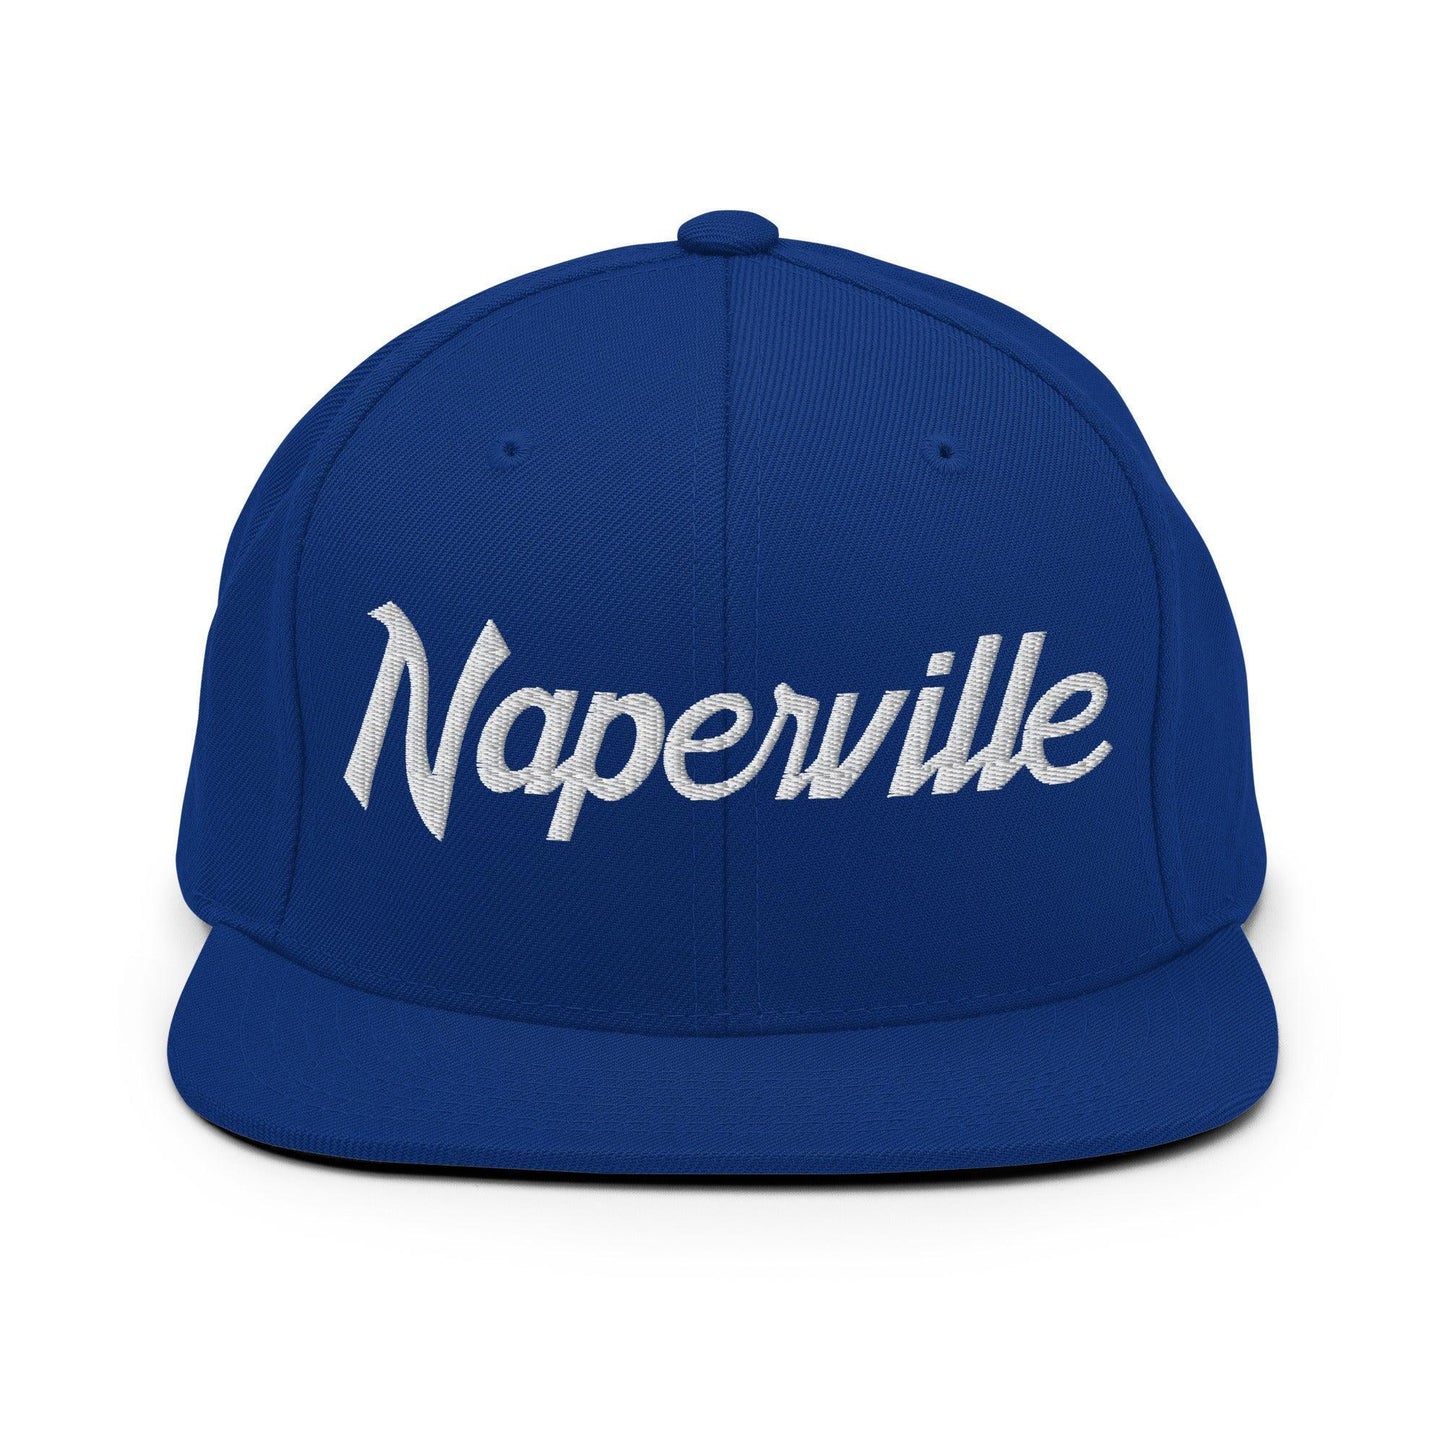 Naperville Script Snapback Hat Royal Blue